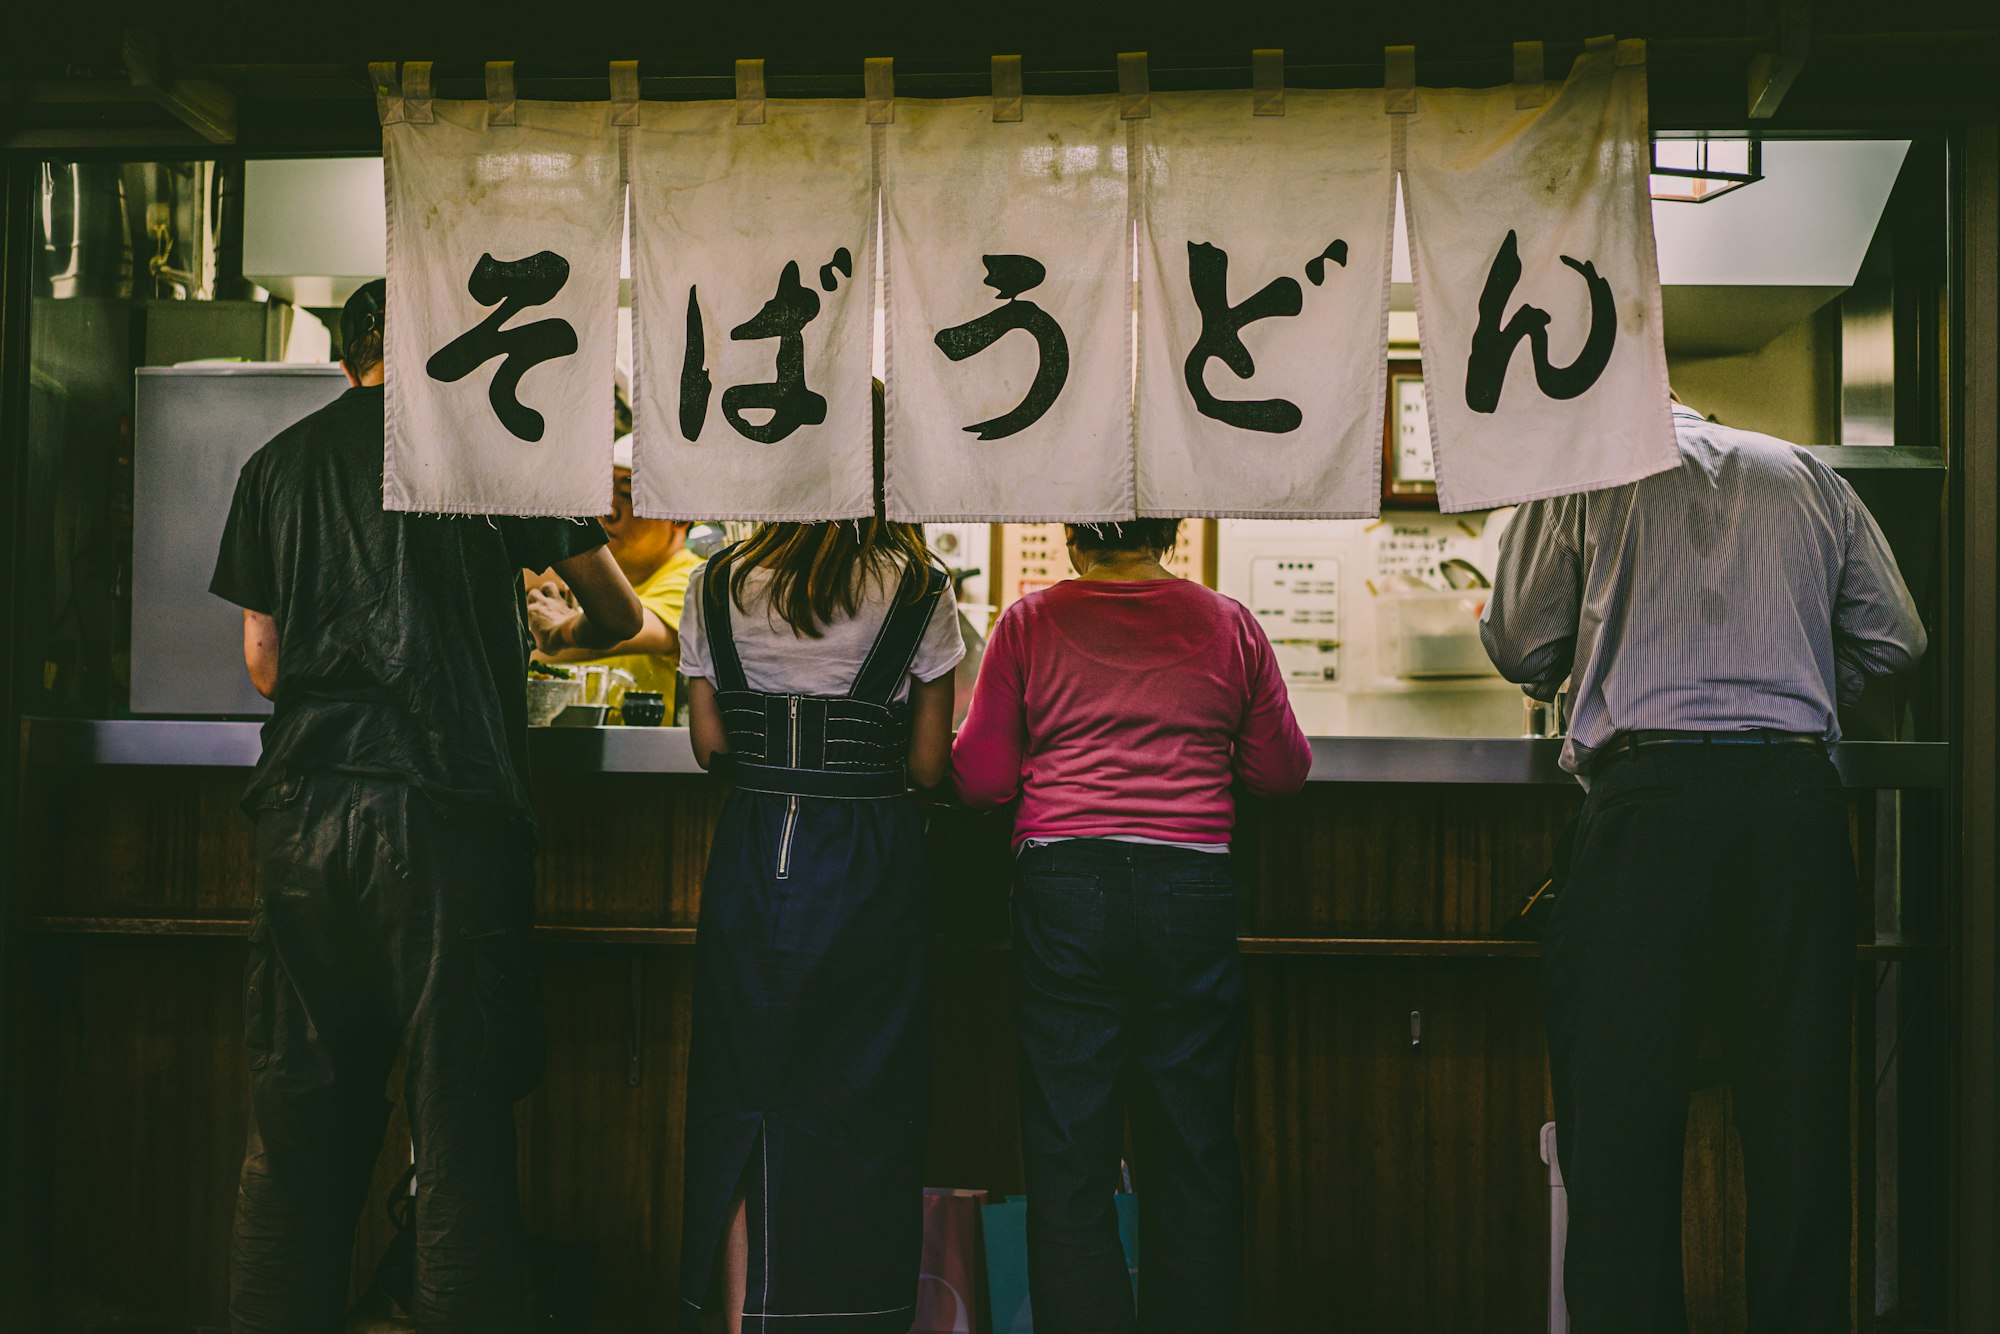 People eating standing up at ramen restaurant in Tokyo, Japan